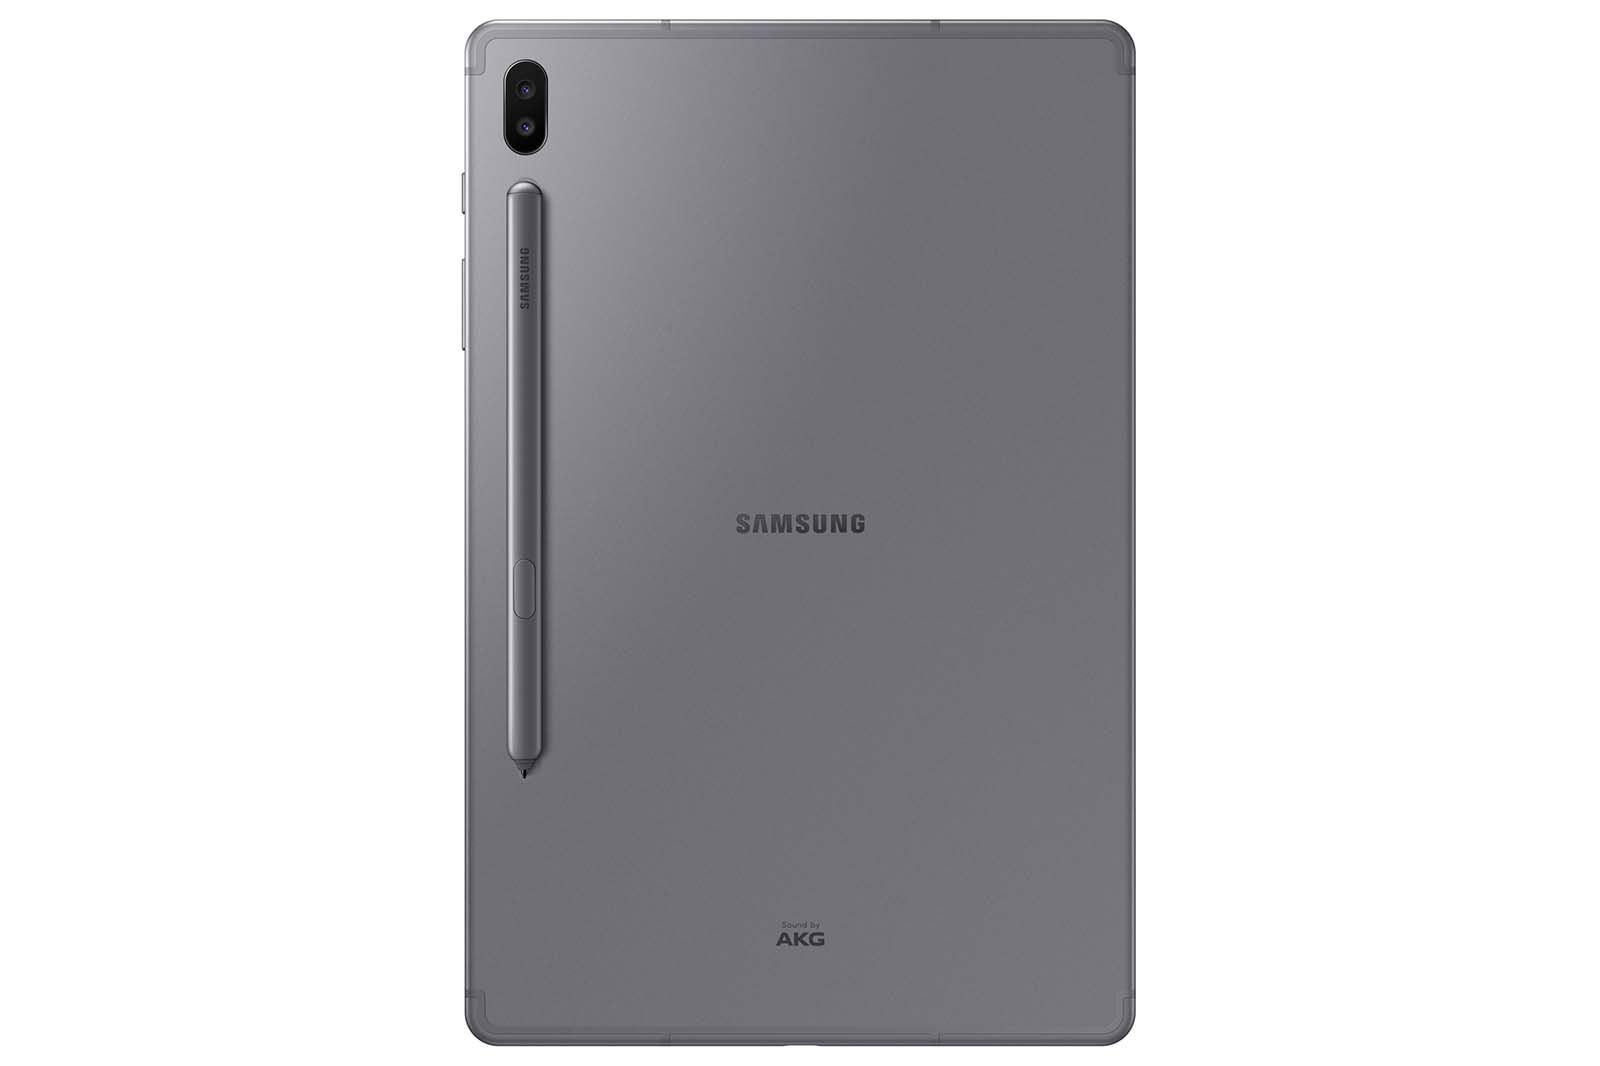 Samsung Galaxy Tab S6 image 5